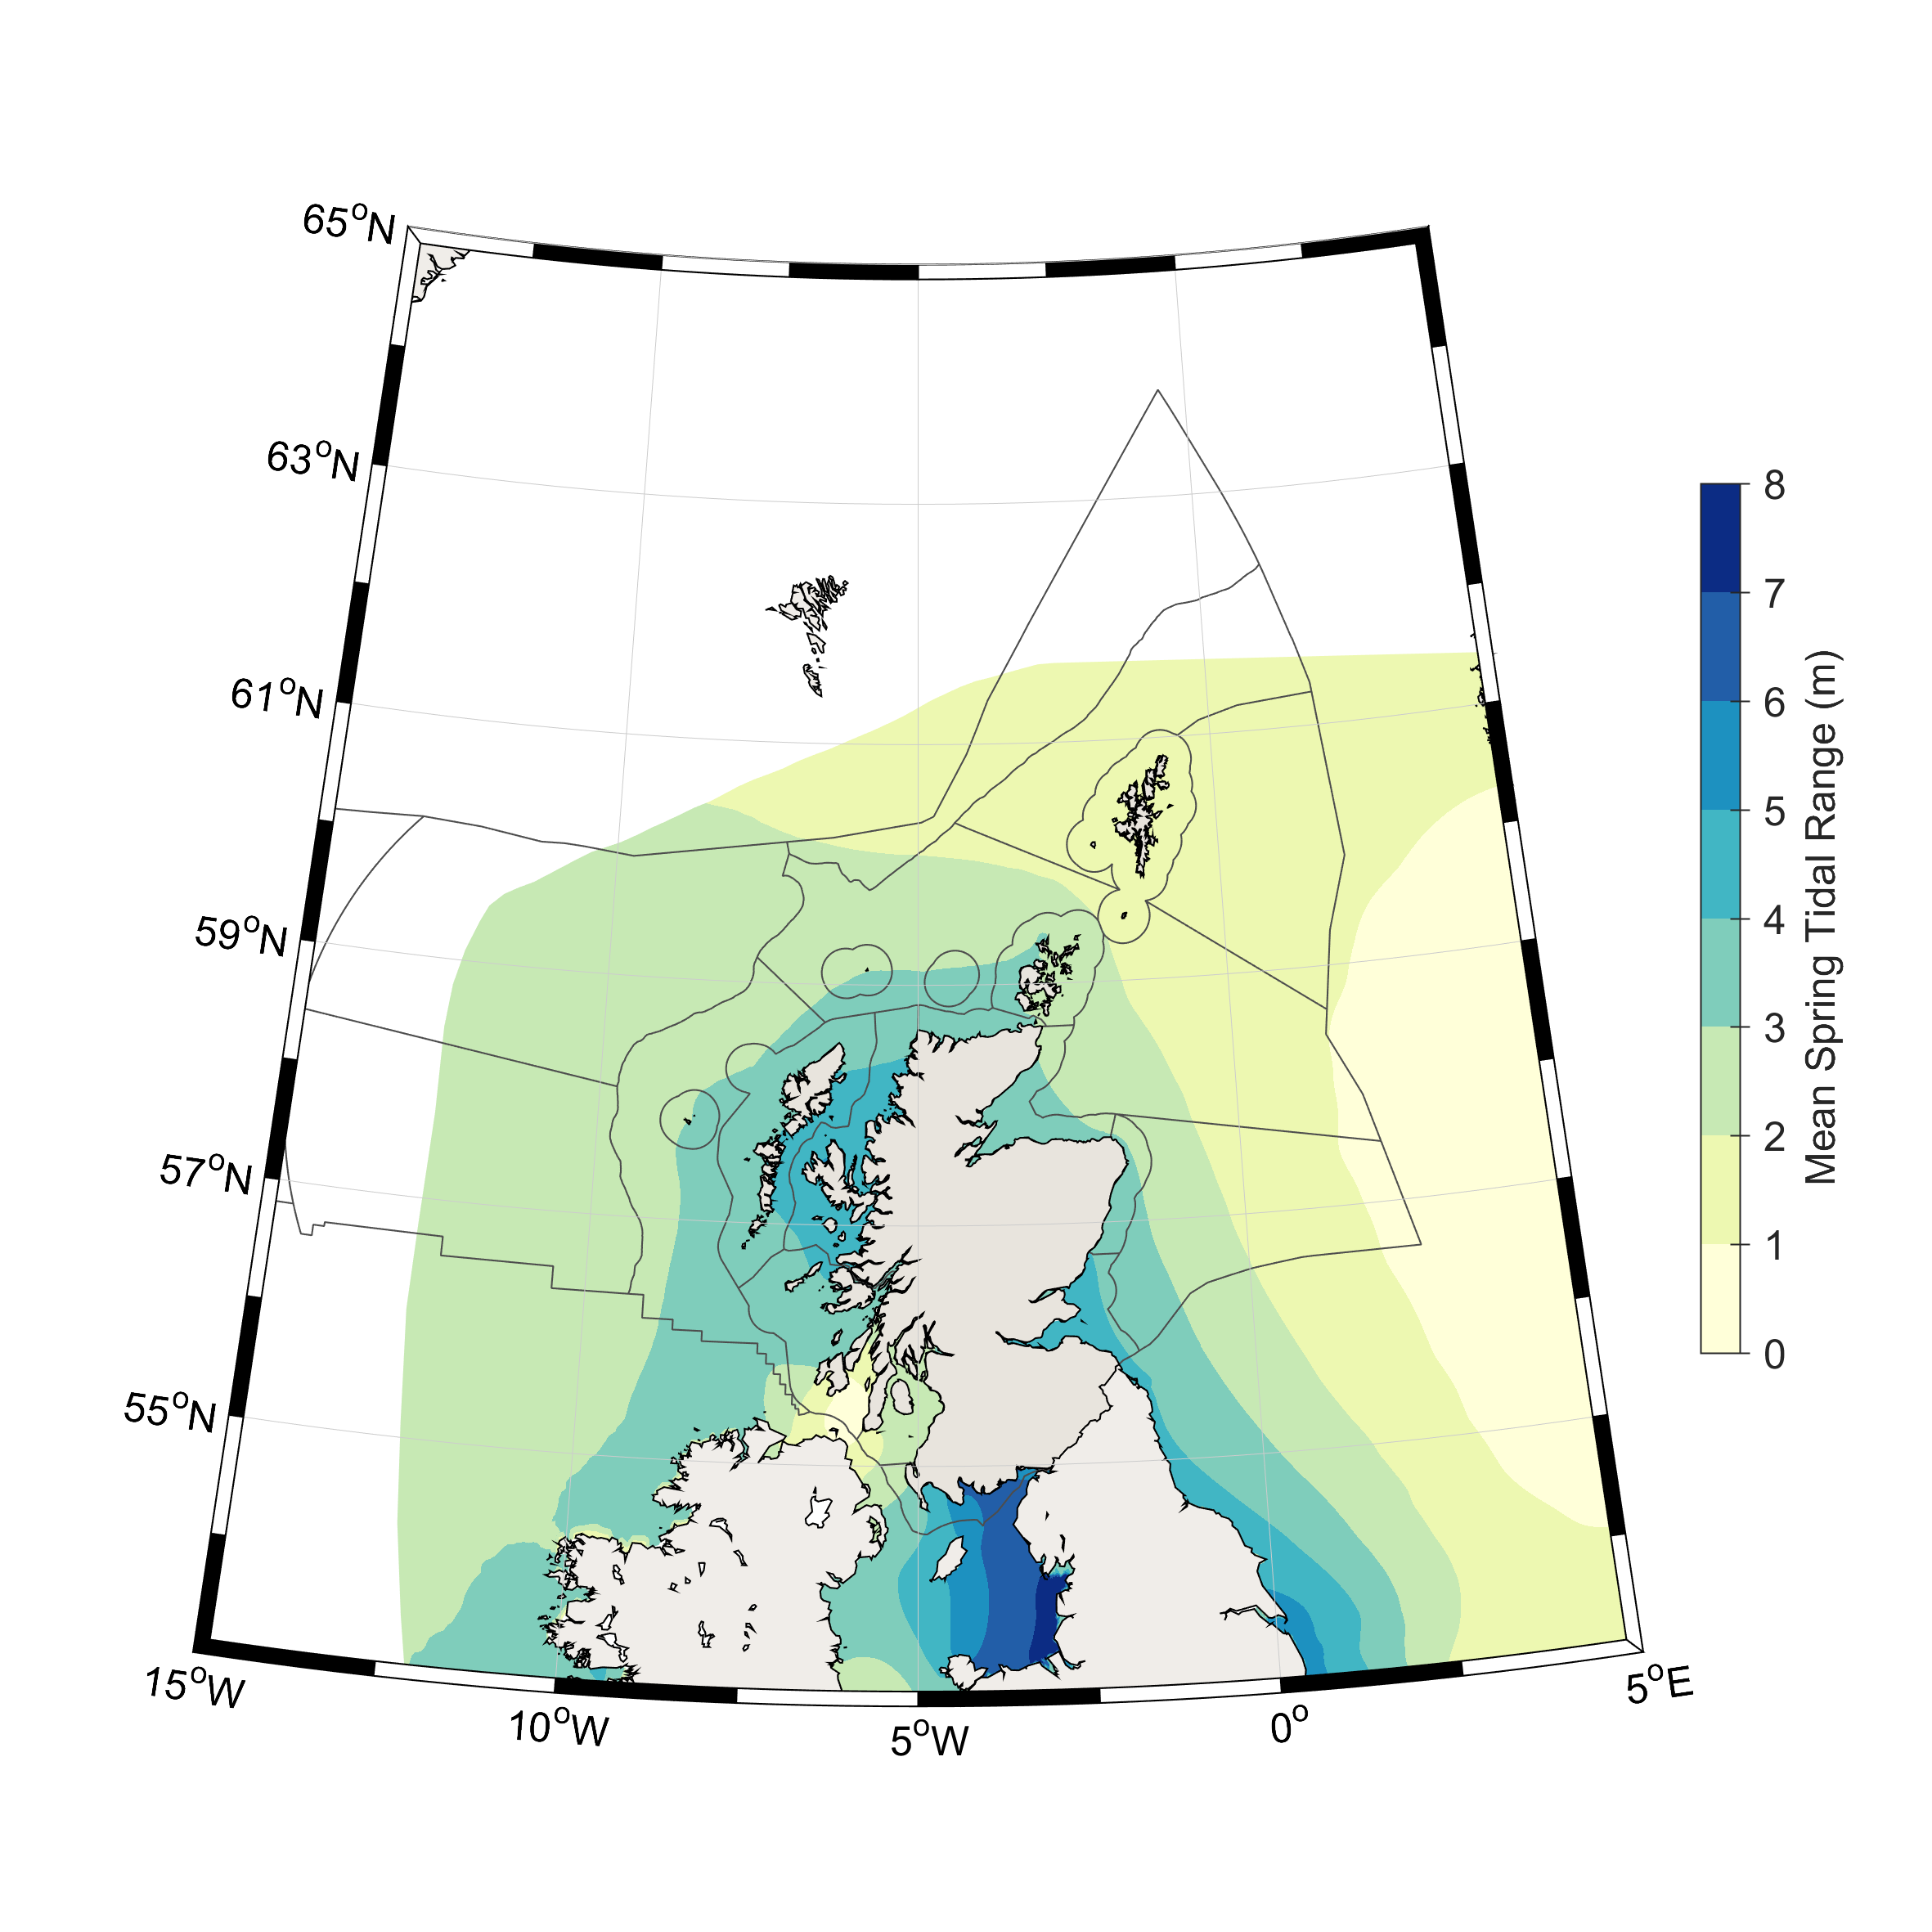 Figure 1: Mean spring tidal range for Scottish waters from the Scottish Shelf Model.